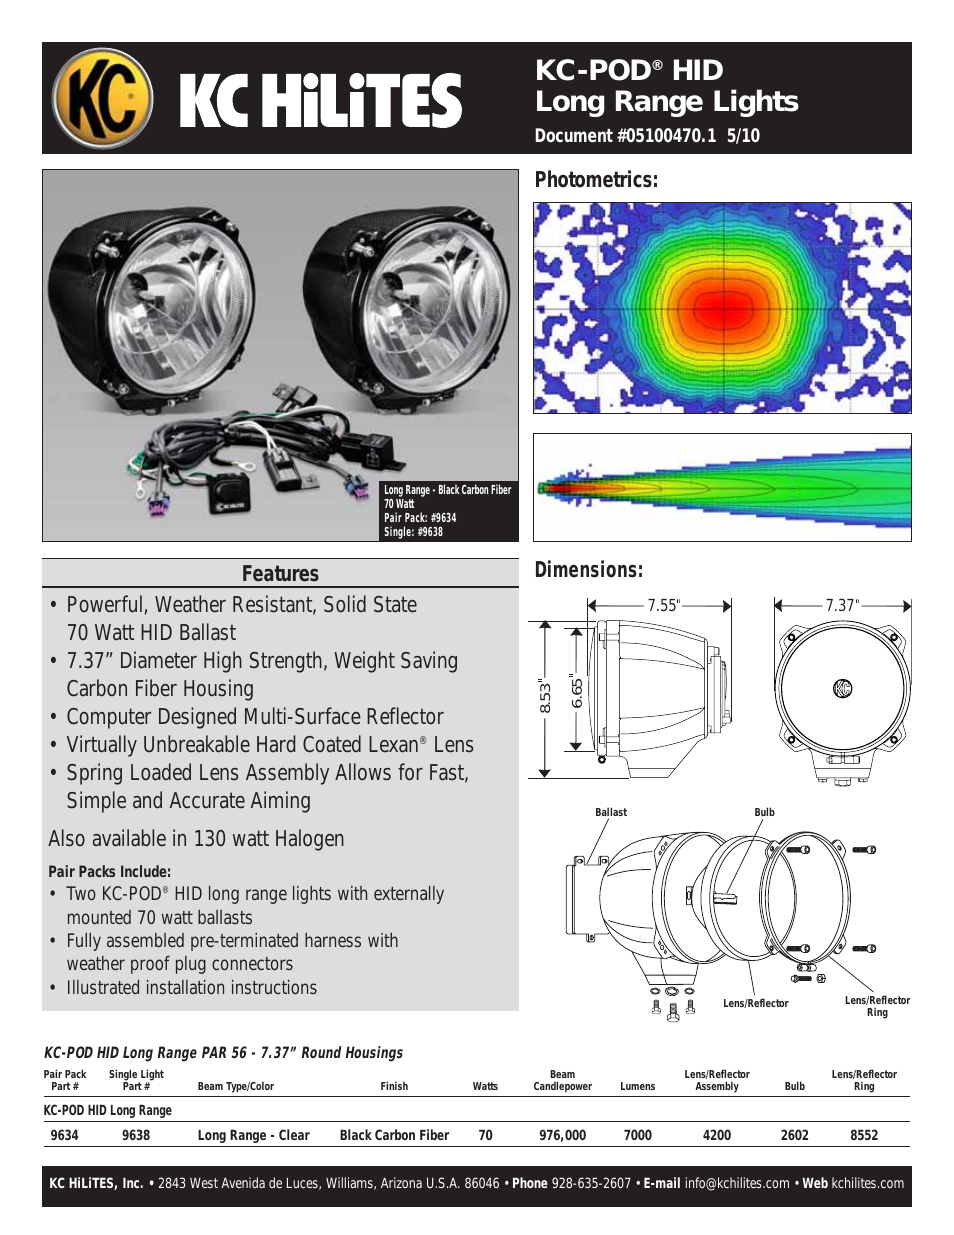 KC-POD HID Long Range Lights Data Sheet